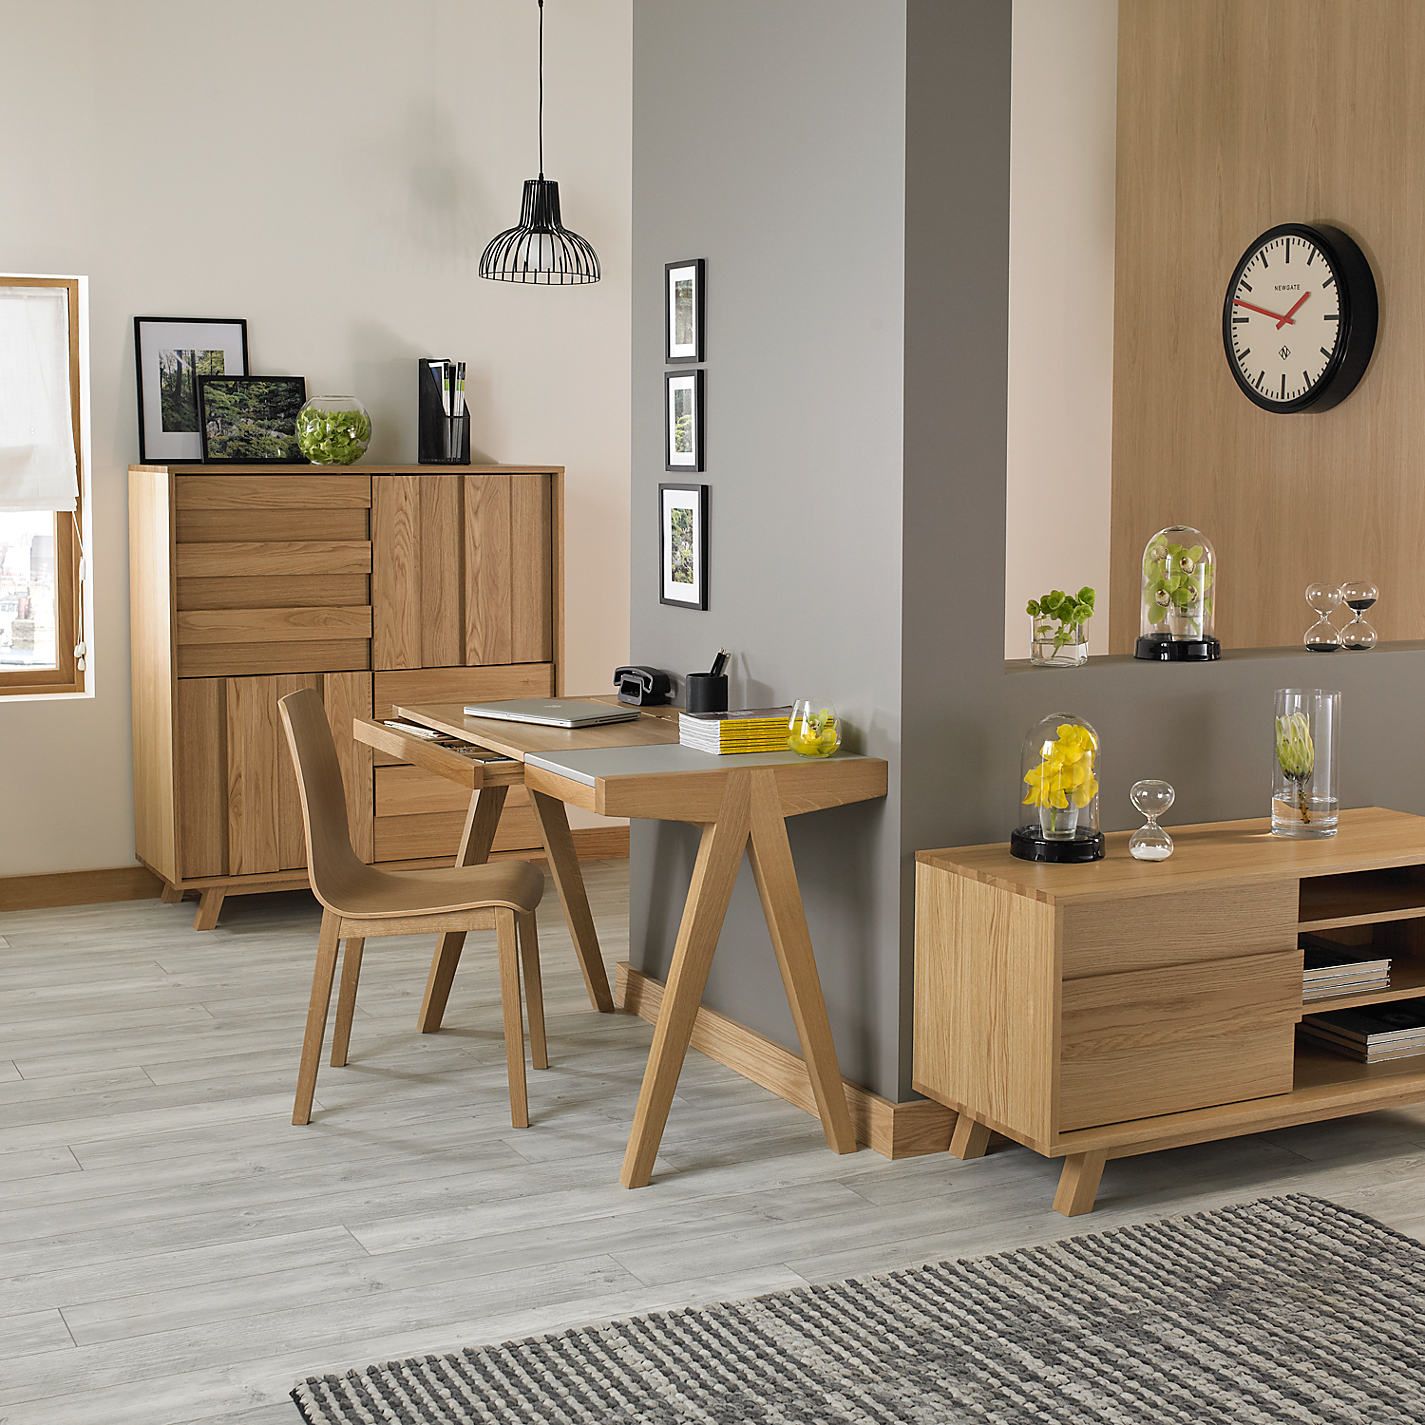 grey wood flooring and oak furniture - Google Search